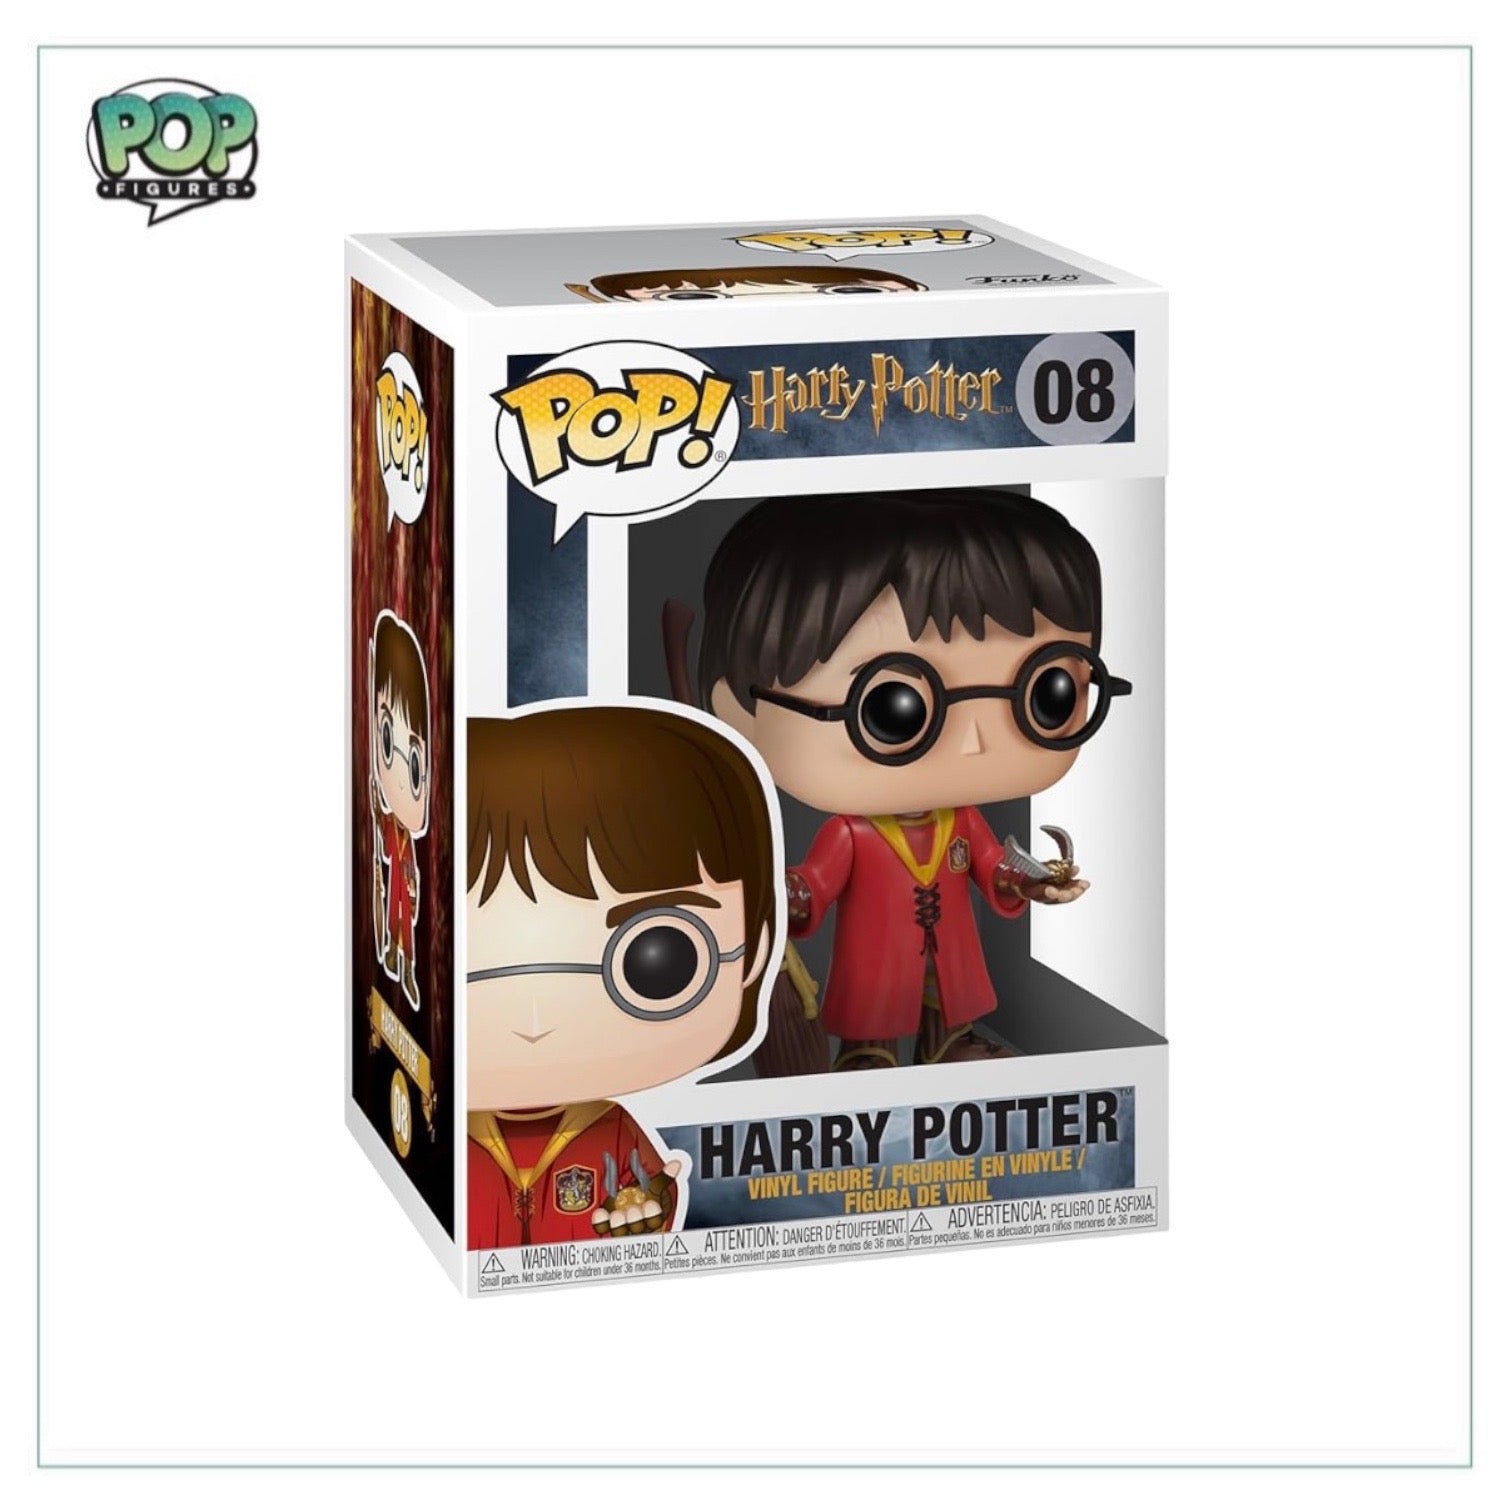 Harry Potter #08 (Quidditch) Funko Pop! - Harry Potter